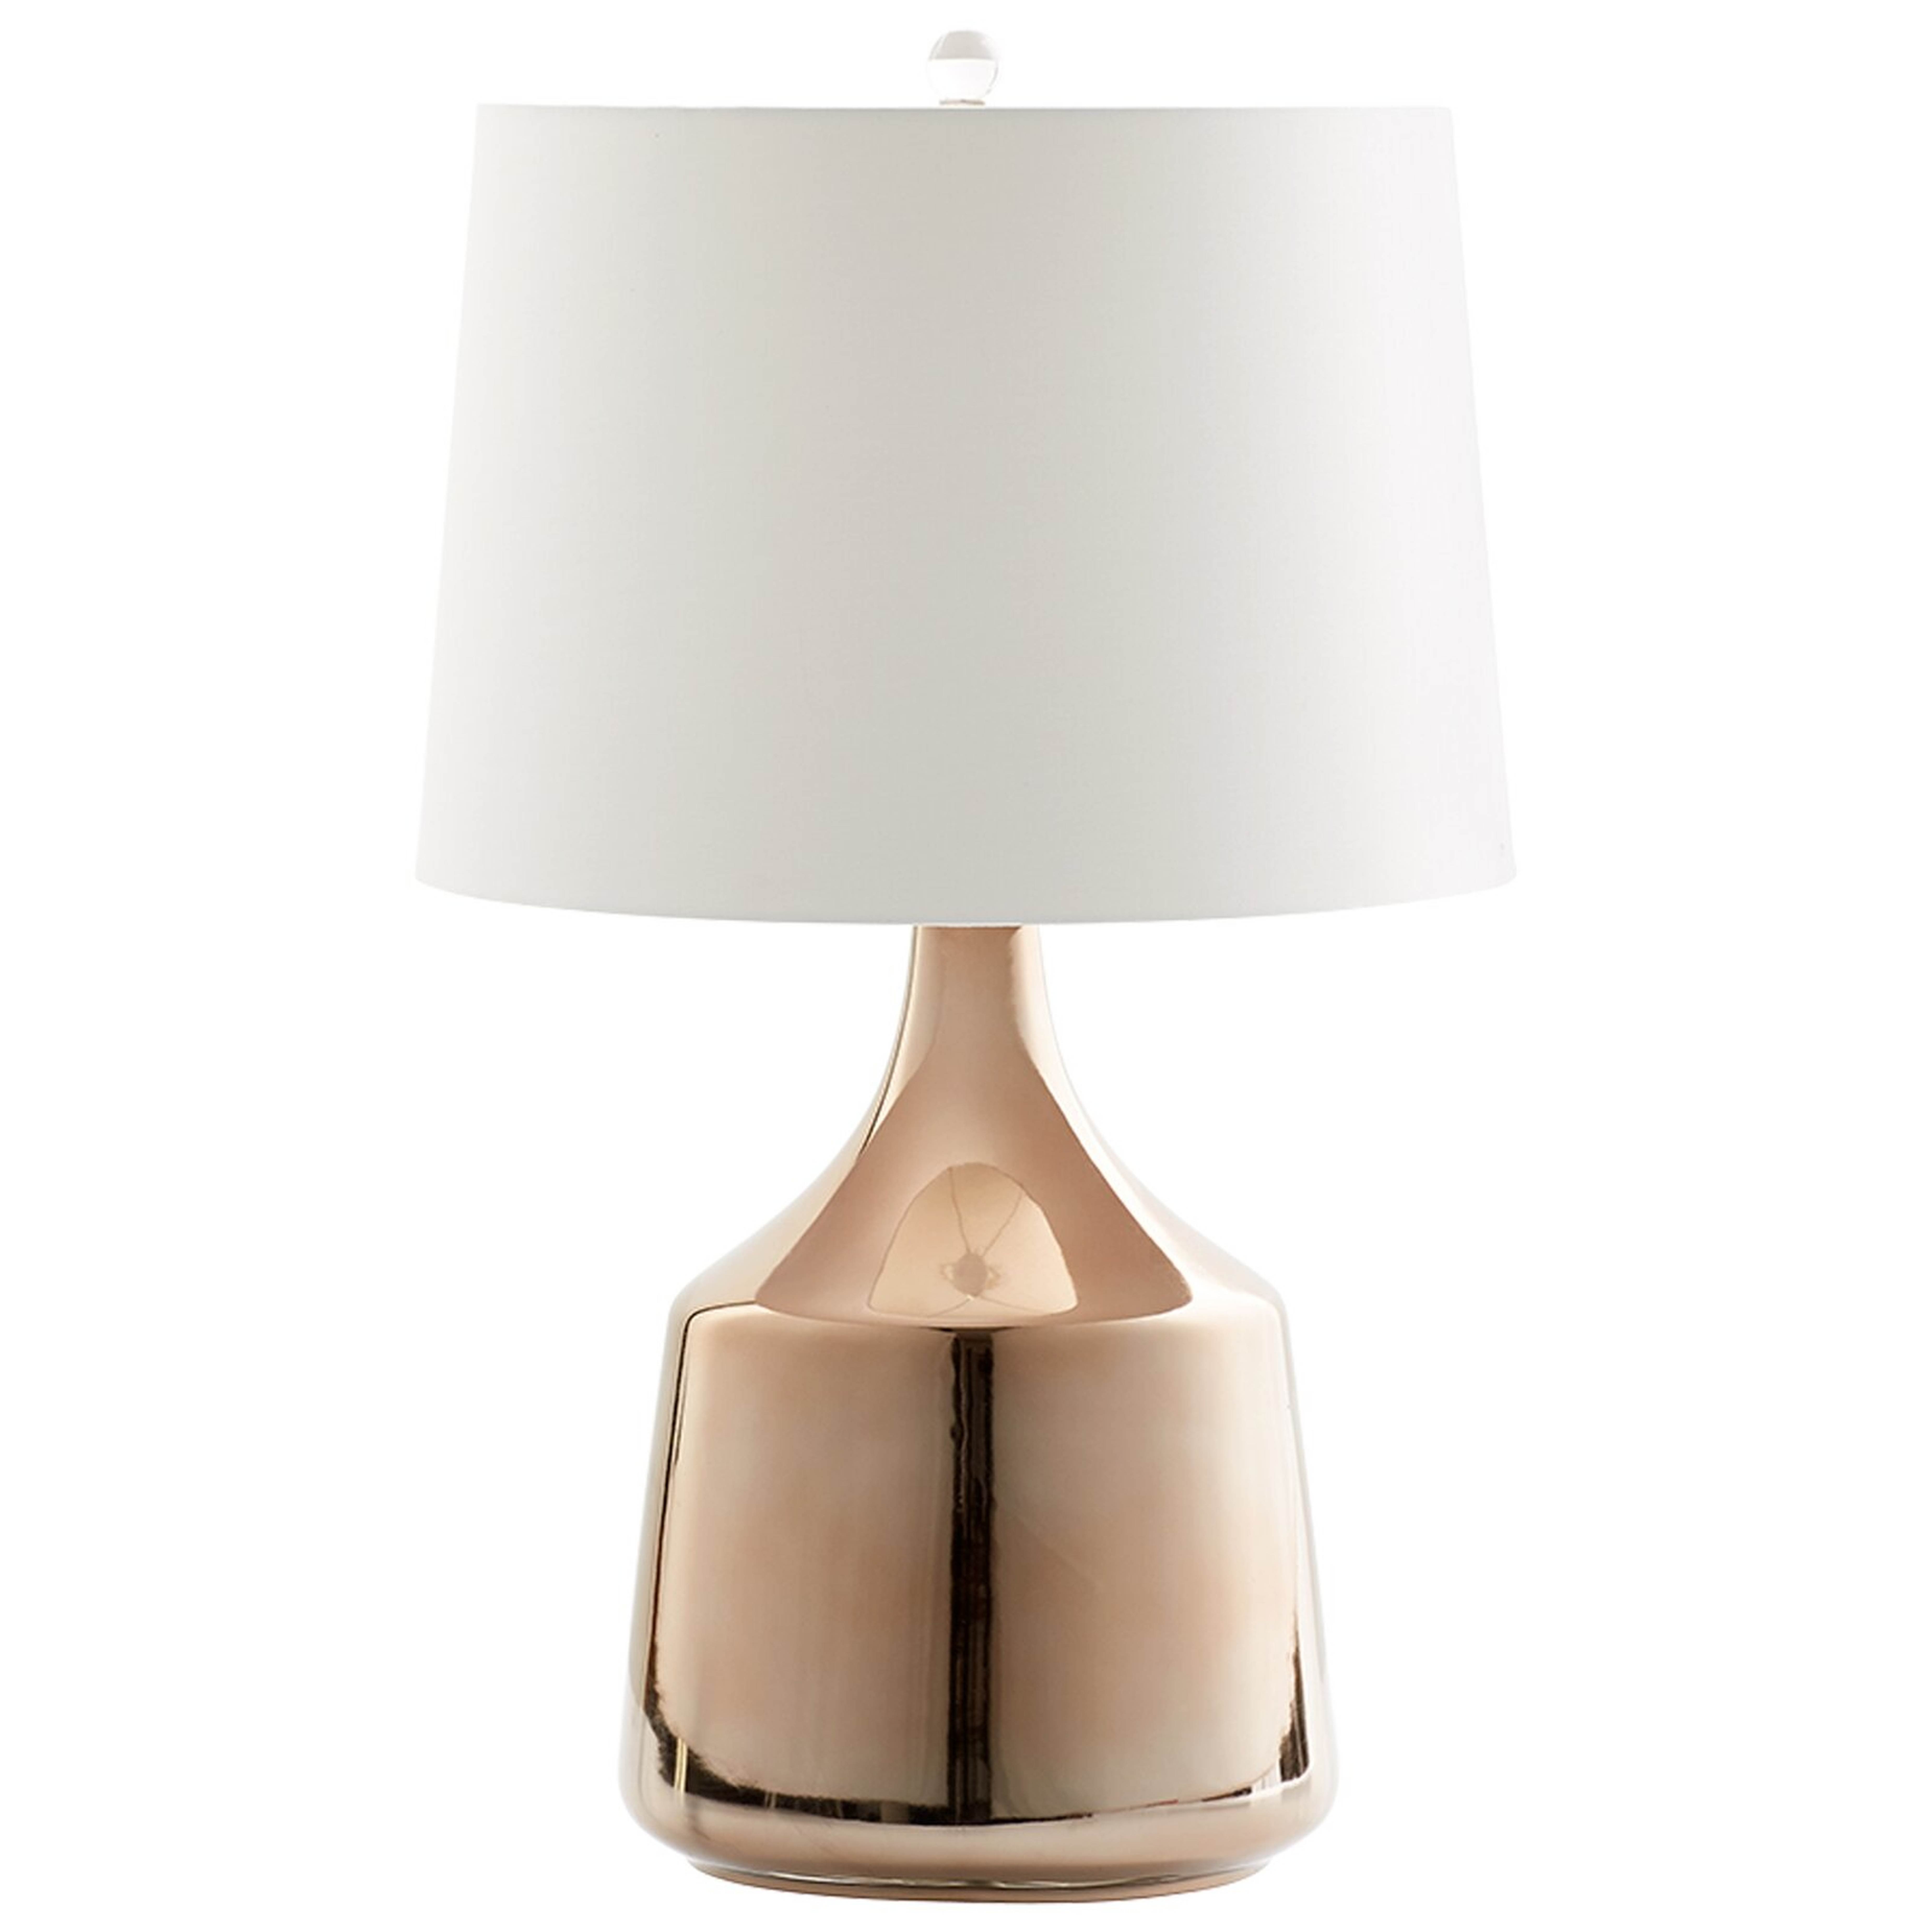 "Cyan Design Flynn 29.8"" Table Lamp" - Perigold